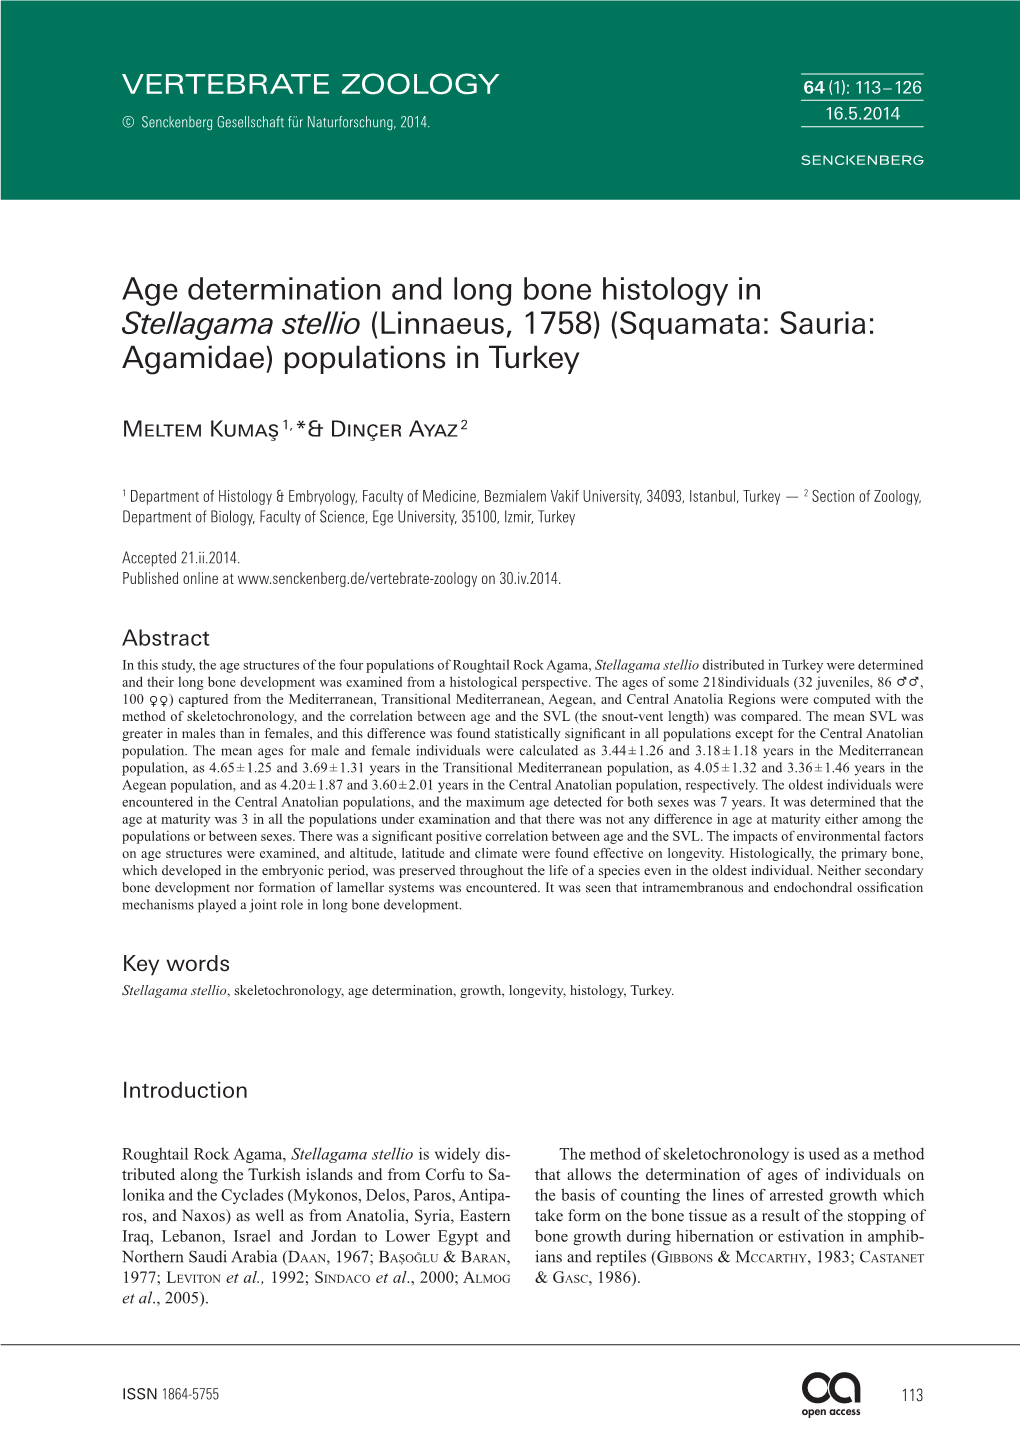 Age Determination and Long Bone Histology in Stellagama Stellio (Linnaeus, 1758) (Squamata: Sauria: Agamidae) Populations in Turkey